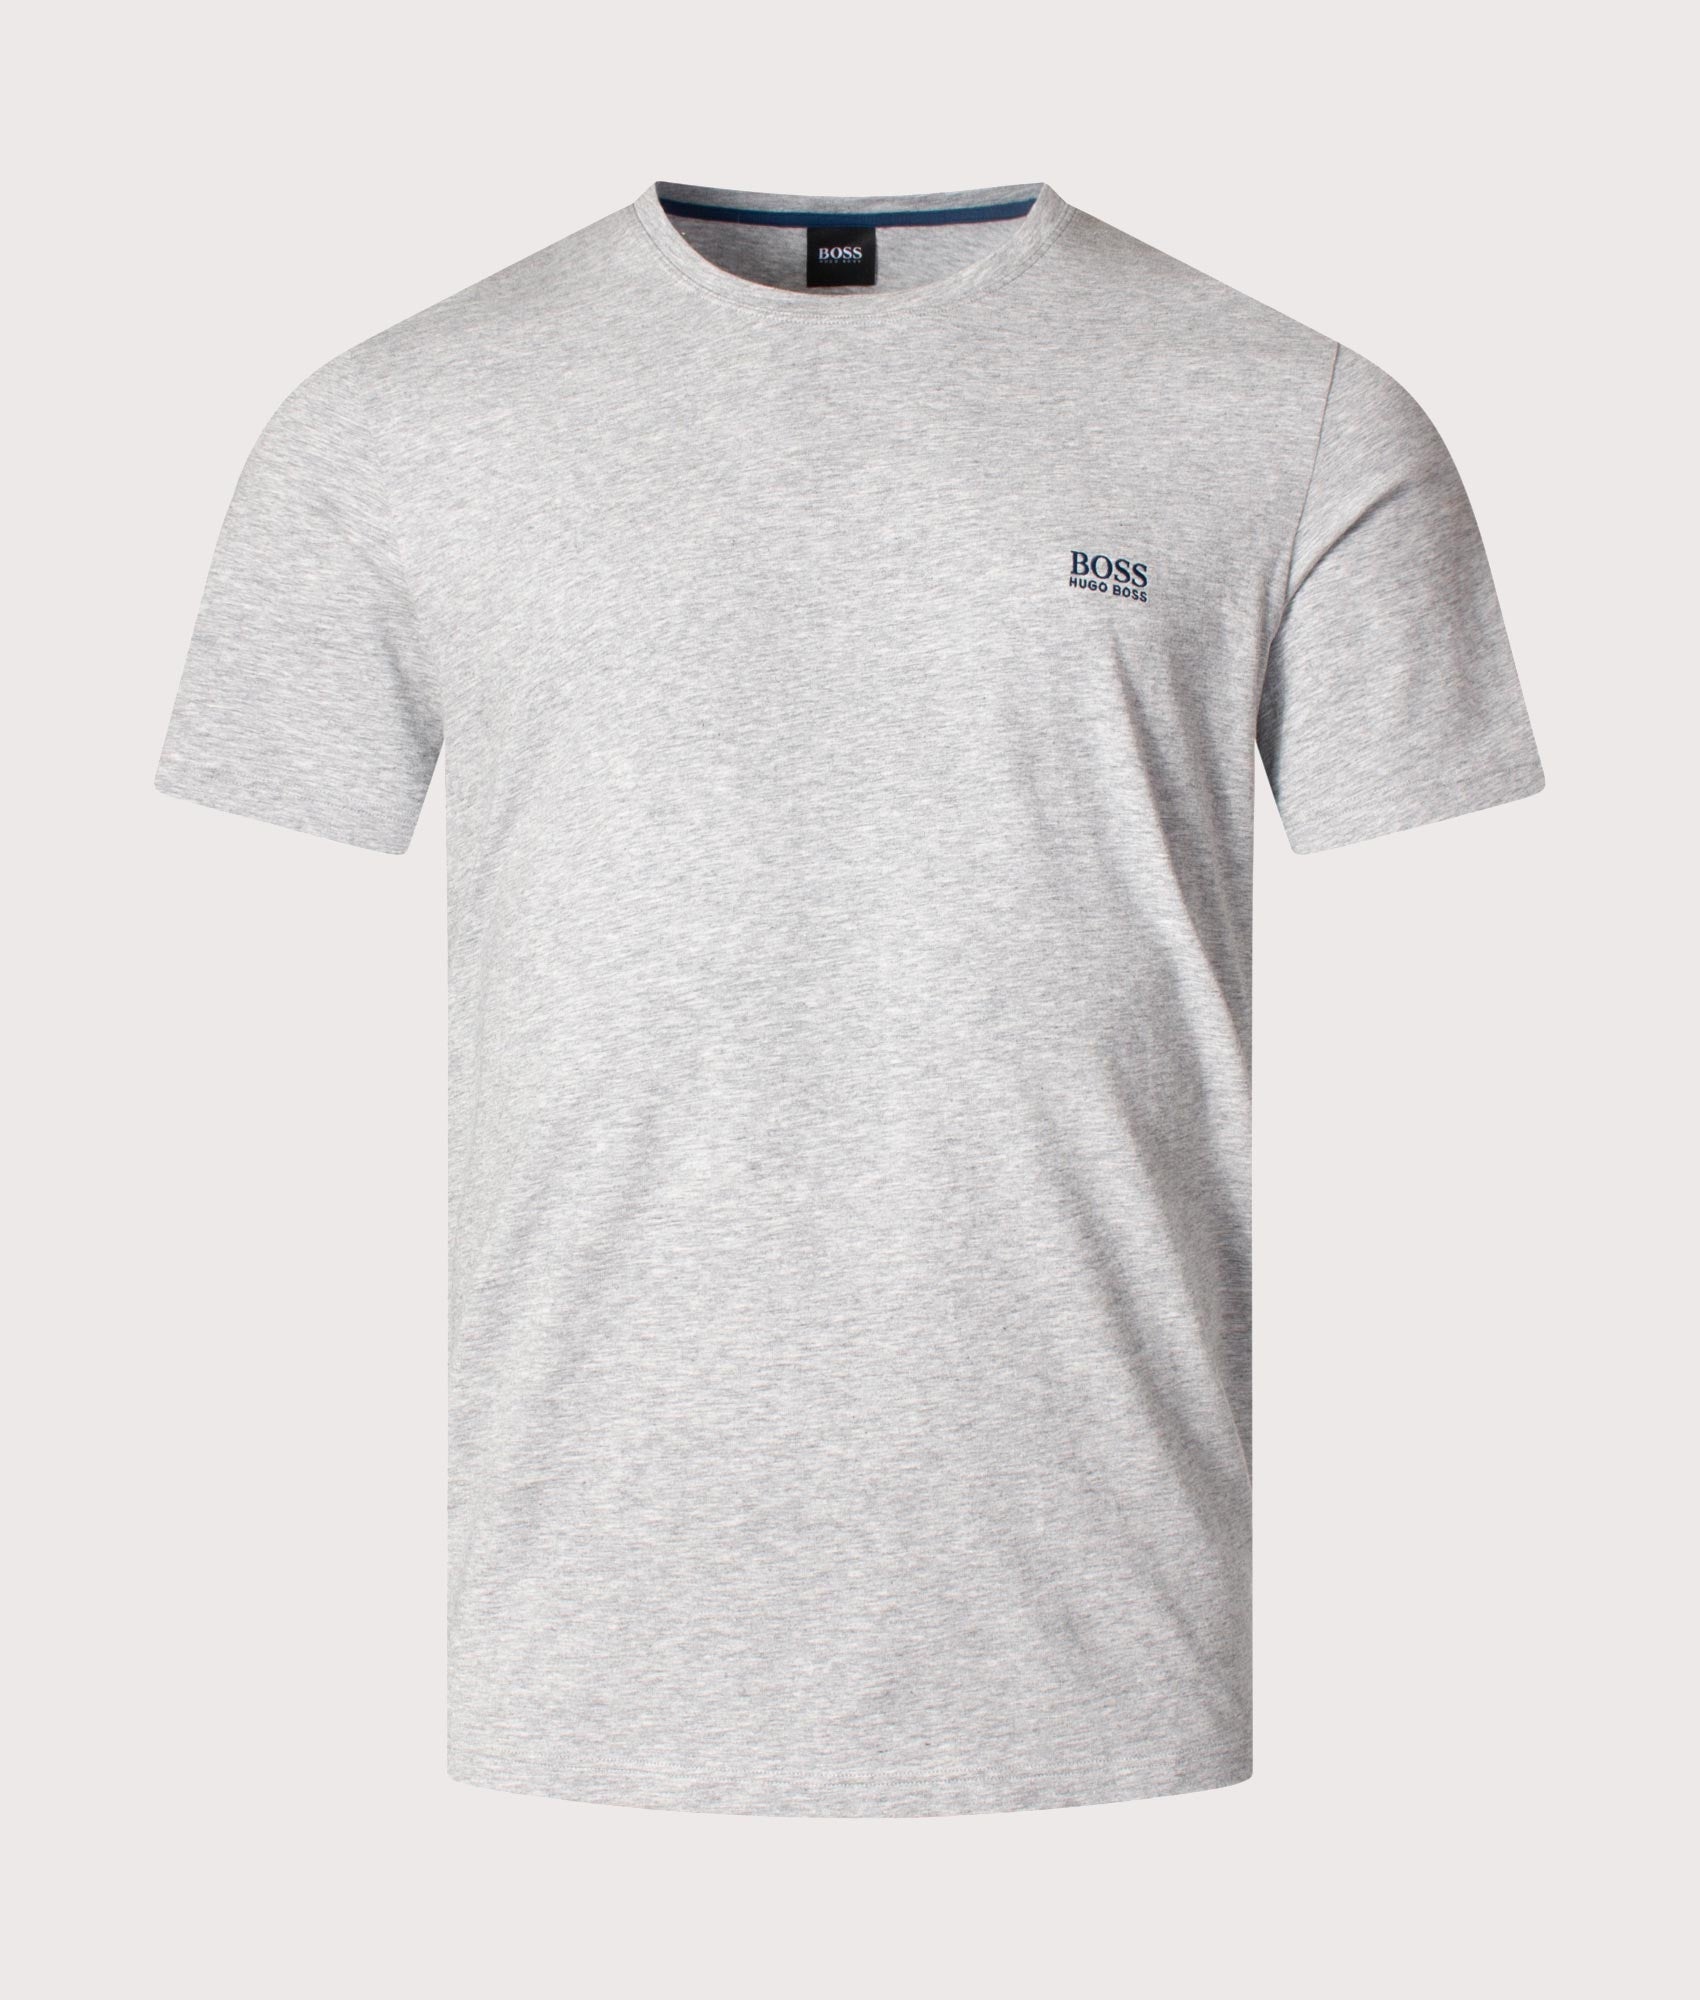 BOSS Mens Mix & Match T-Shirt - Colour: 054 Light/Pastel Grey - Size: Small